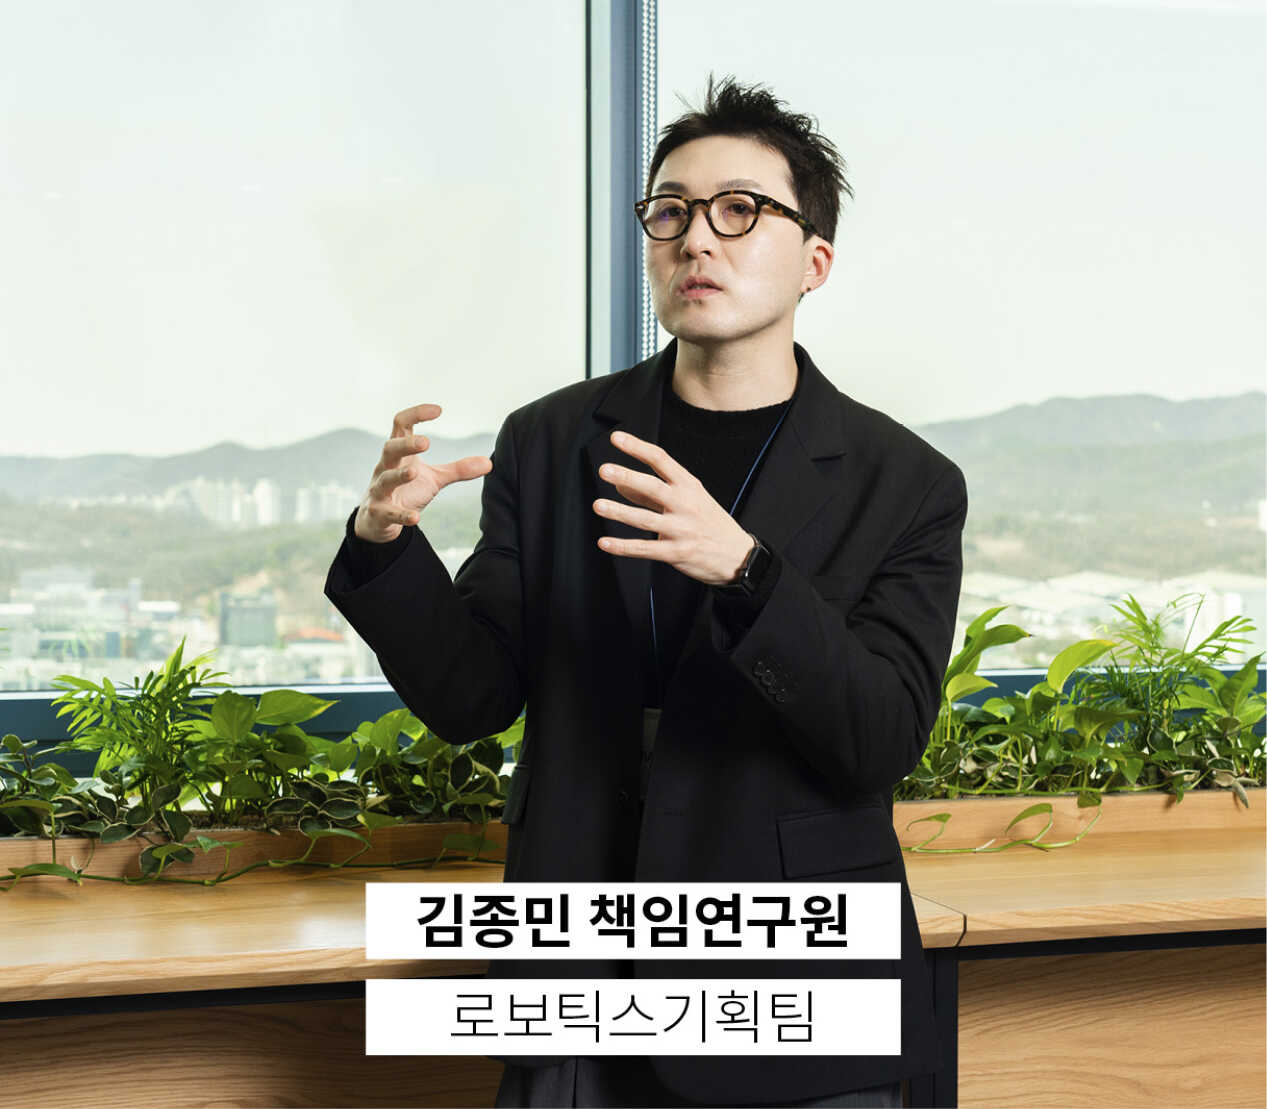 ACR의 유저친화적요소에 대해 설명 중인 김종민 책임연구원